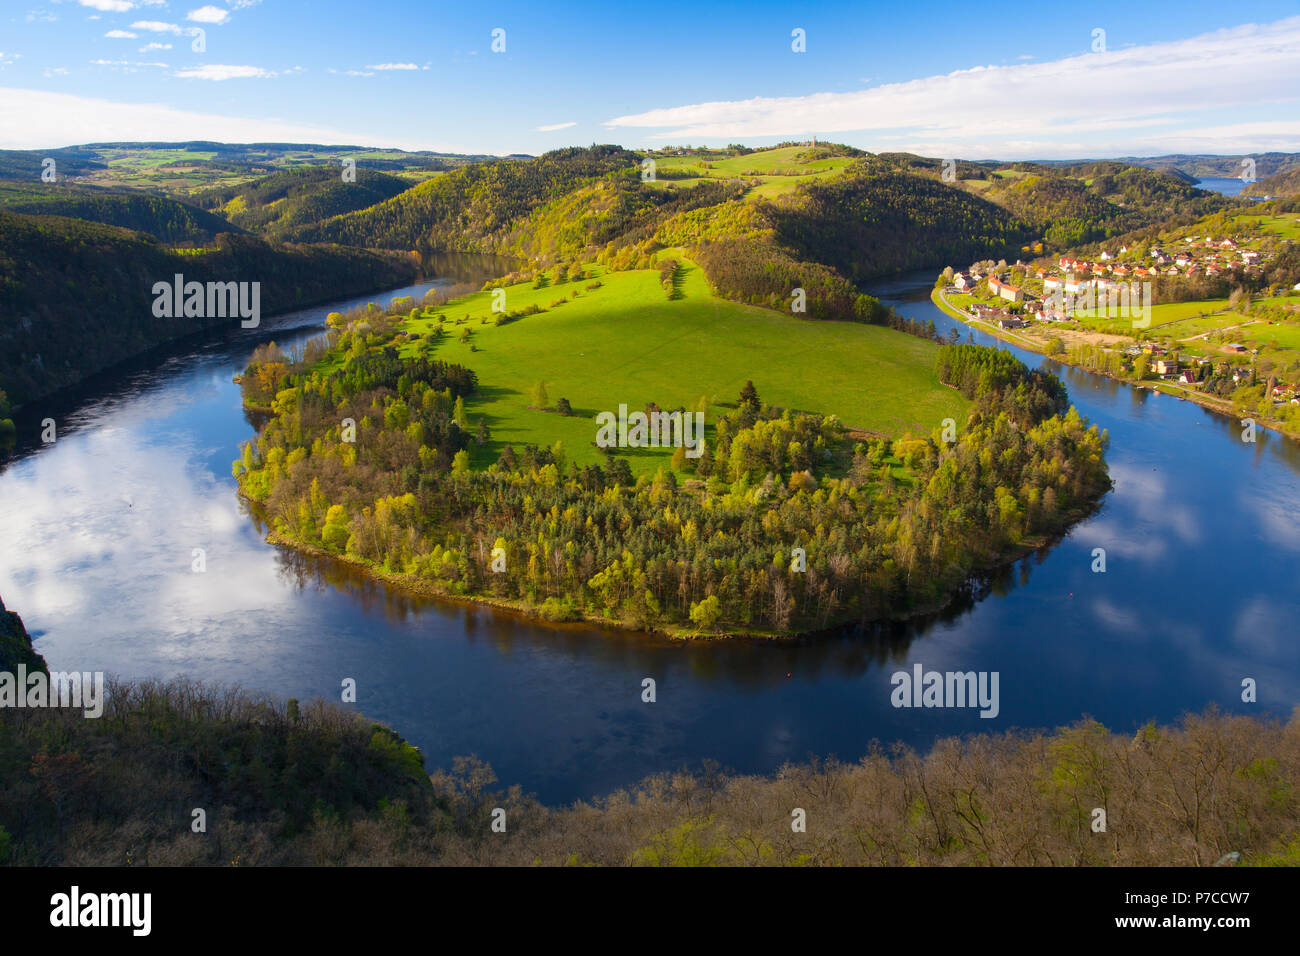 Famous meander on Vltava river in springtime, Slapy dam, Czech Republic. Stock Photo